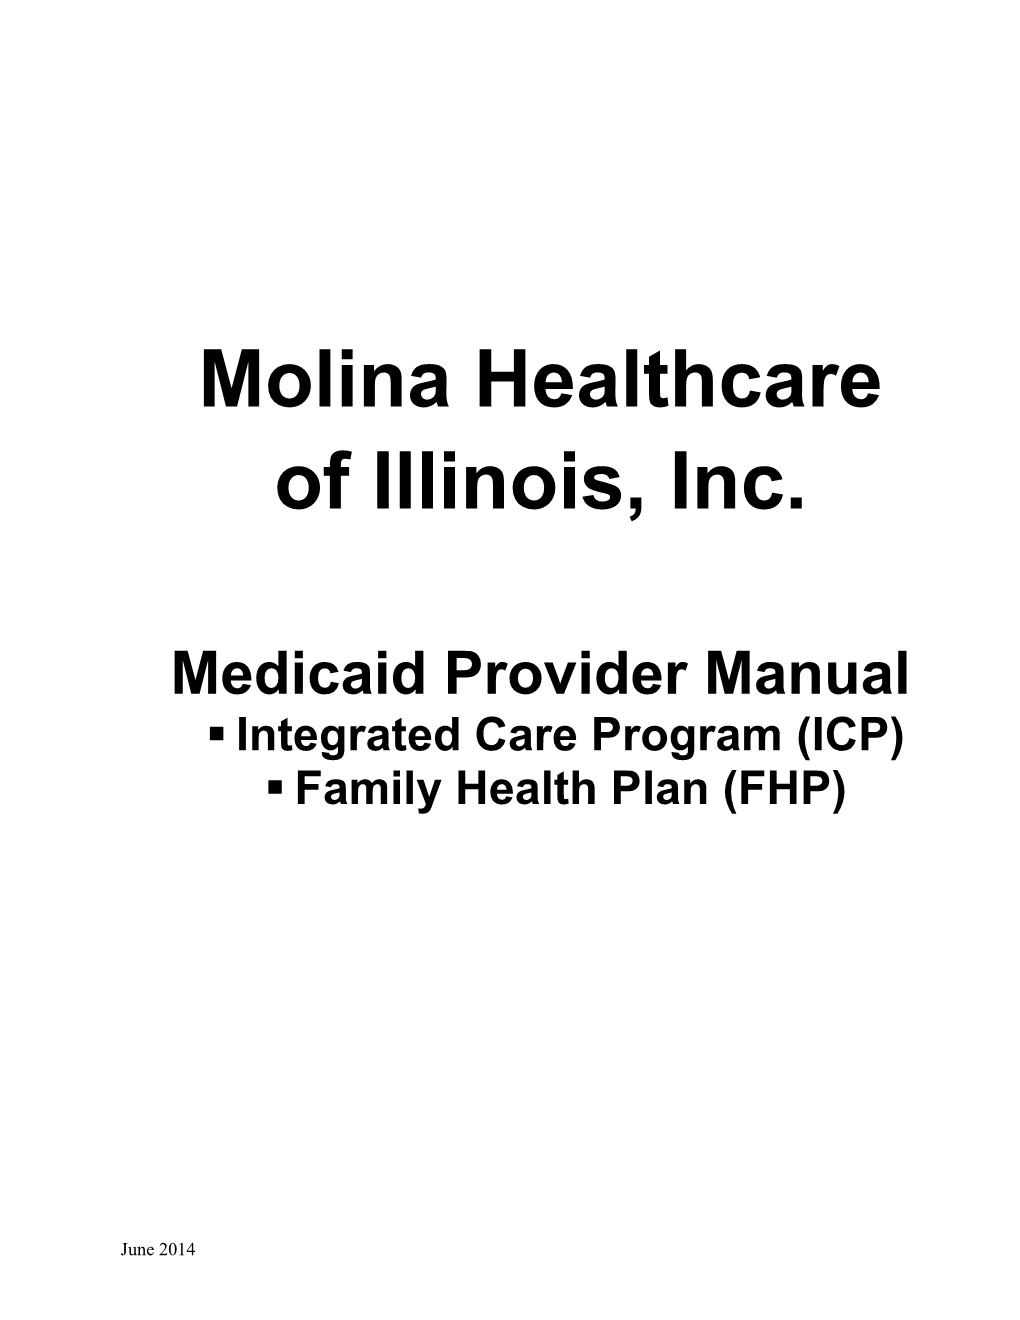 Molina Healthcare of Illinois, Inc